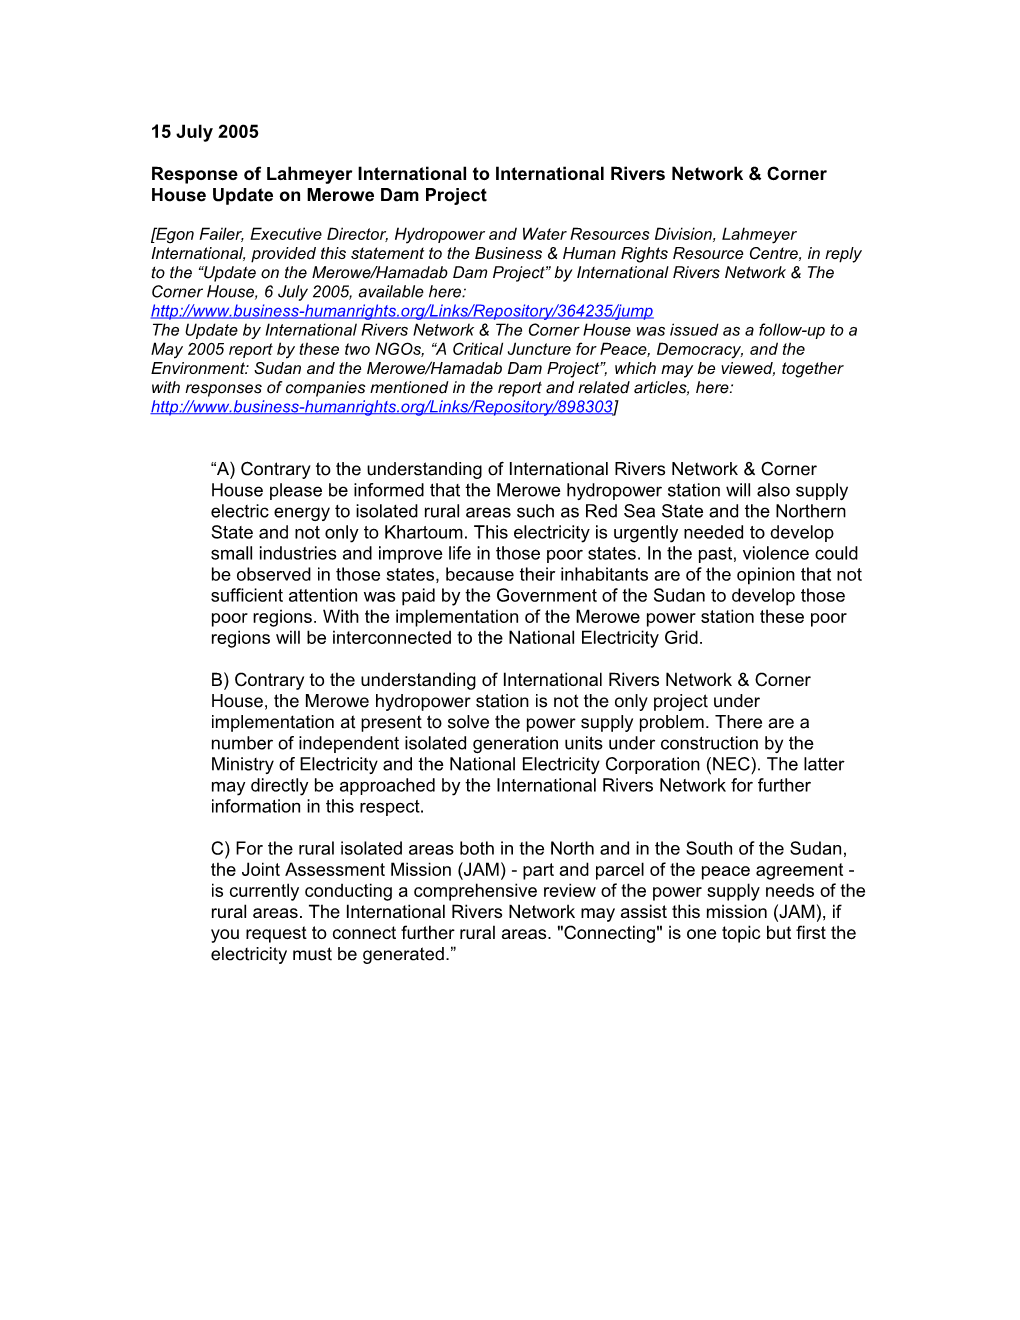 Response of Lahmeyer International to International Rivers Network & Corner House Update